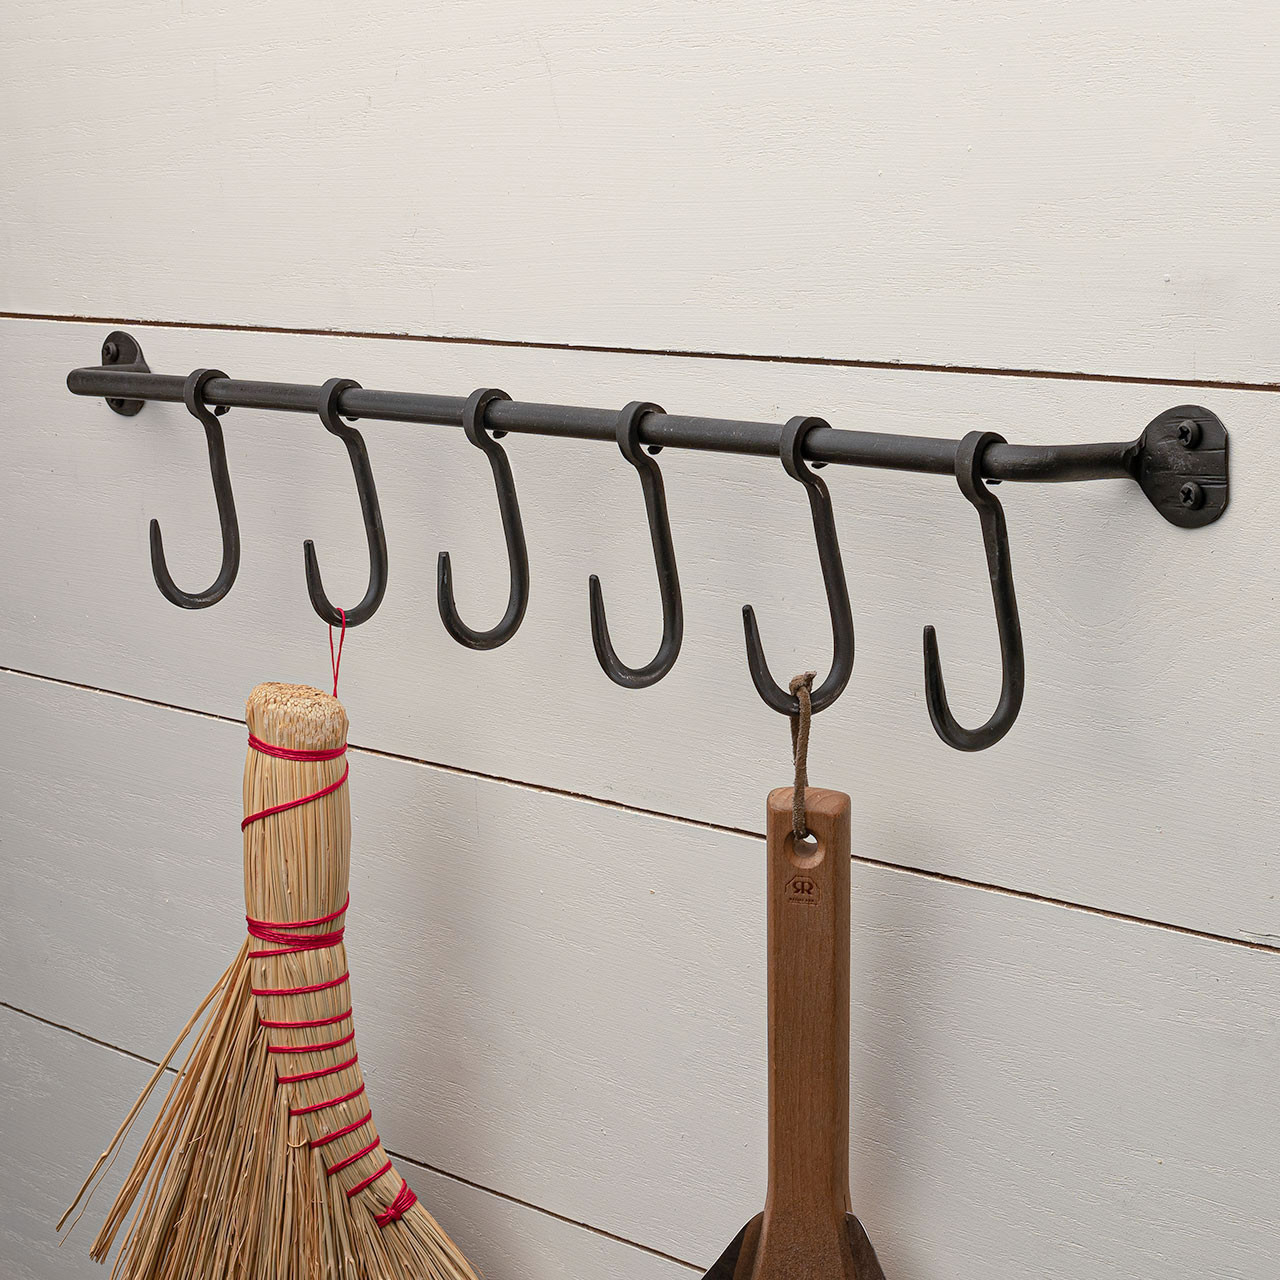 Set of 6 small metal clothes hooks, coat hangers (color: bronze